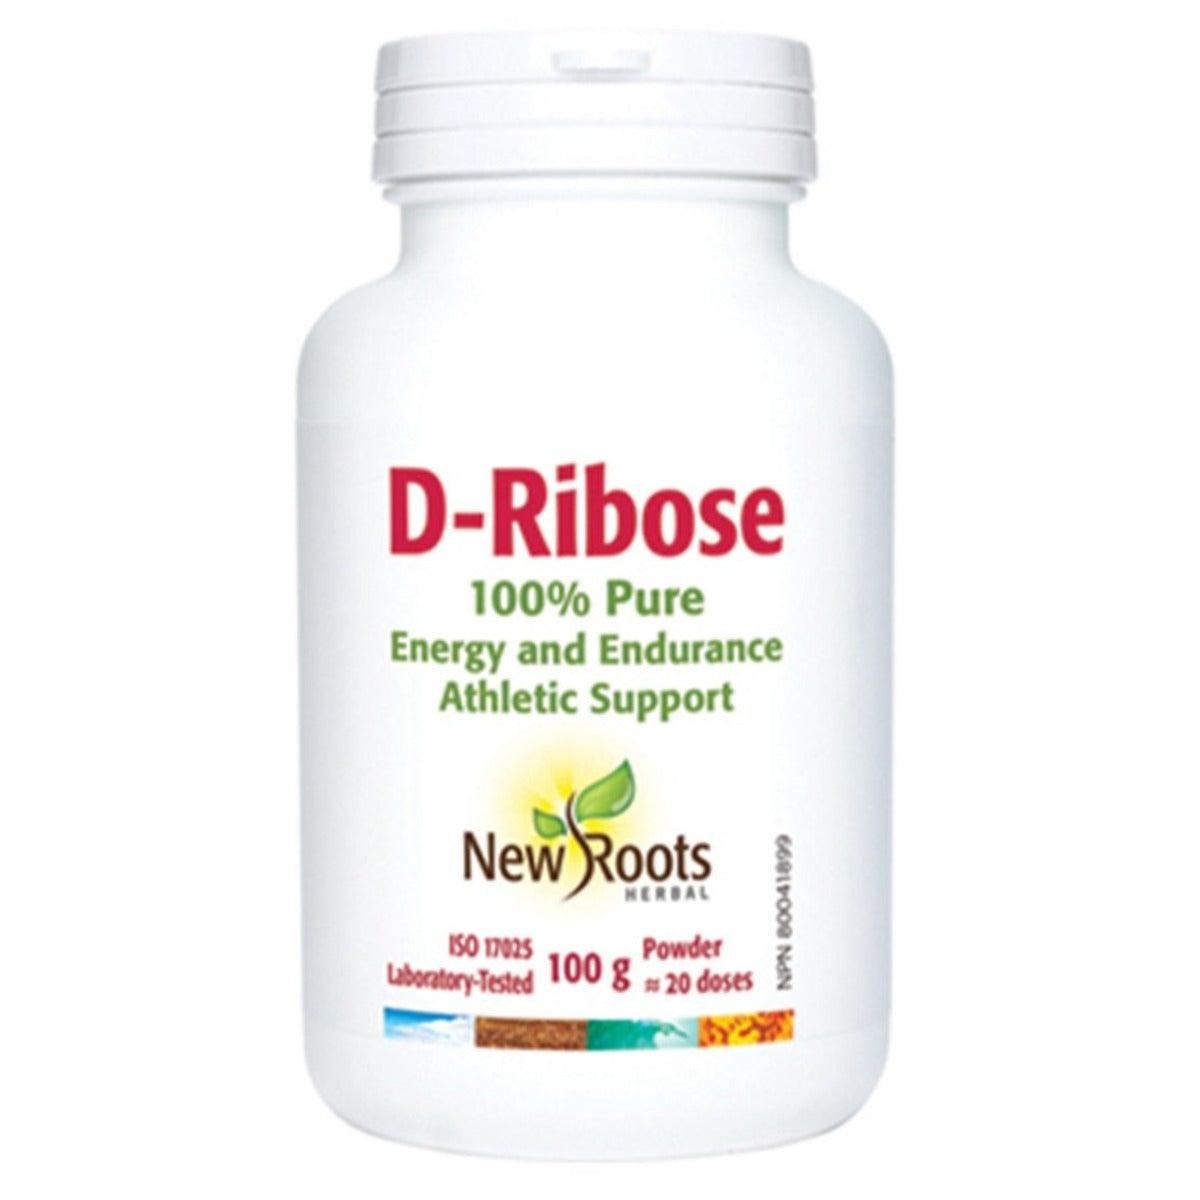 New Roots D-Ribose 100g Supplements - Amino Acids at Village Vitamin Store